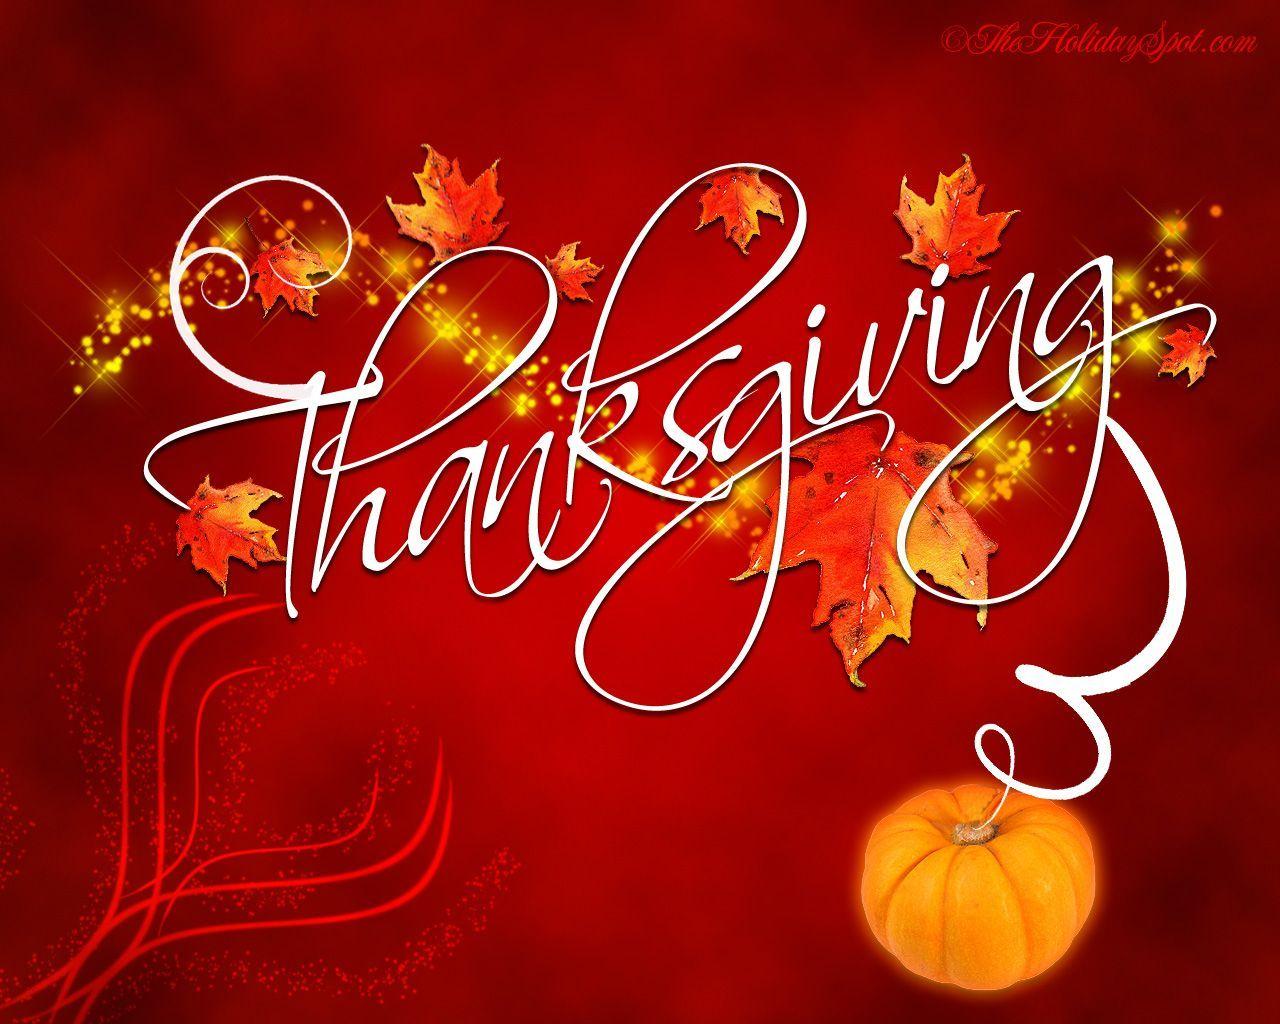 Happy Thanksgiving Day 2012 HD Wallpaper. wallpaper